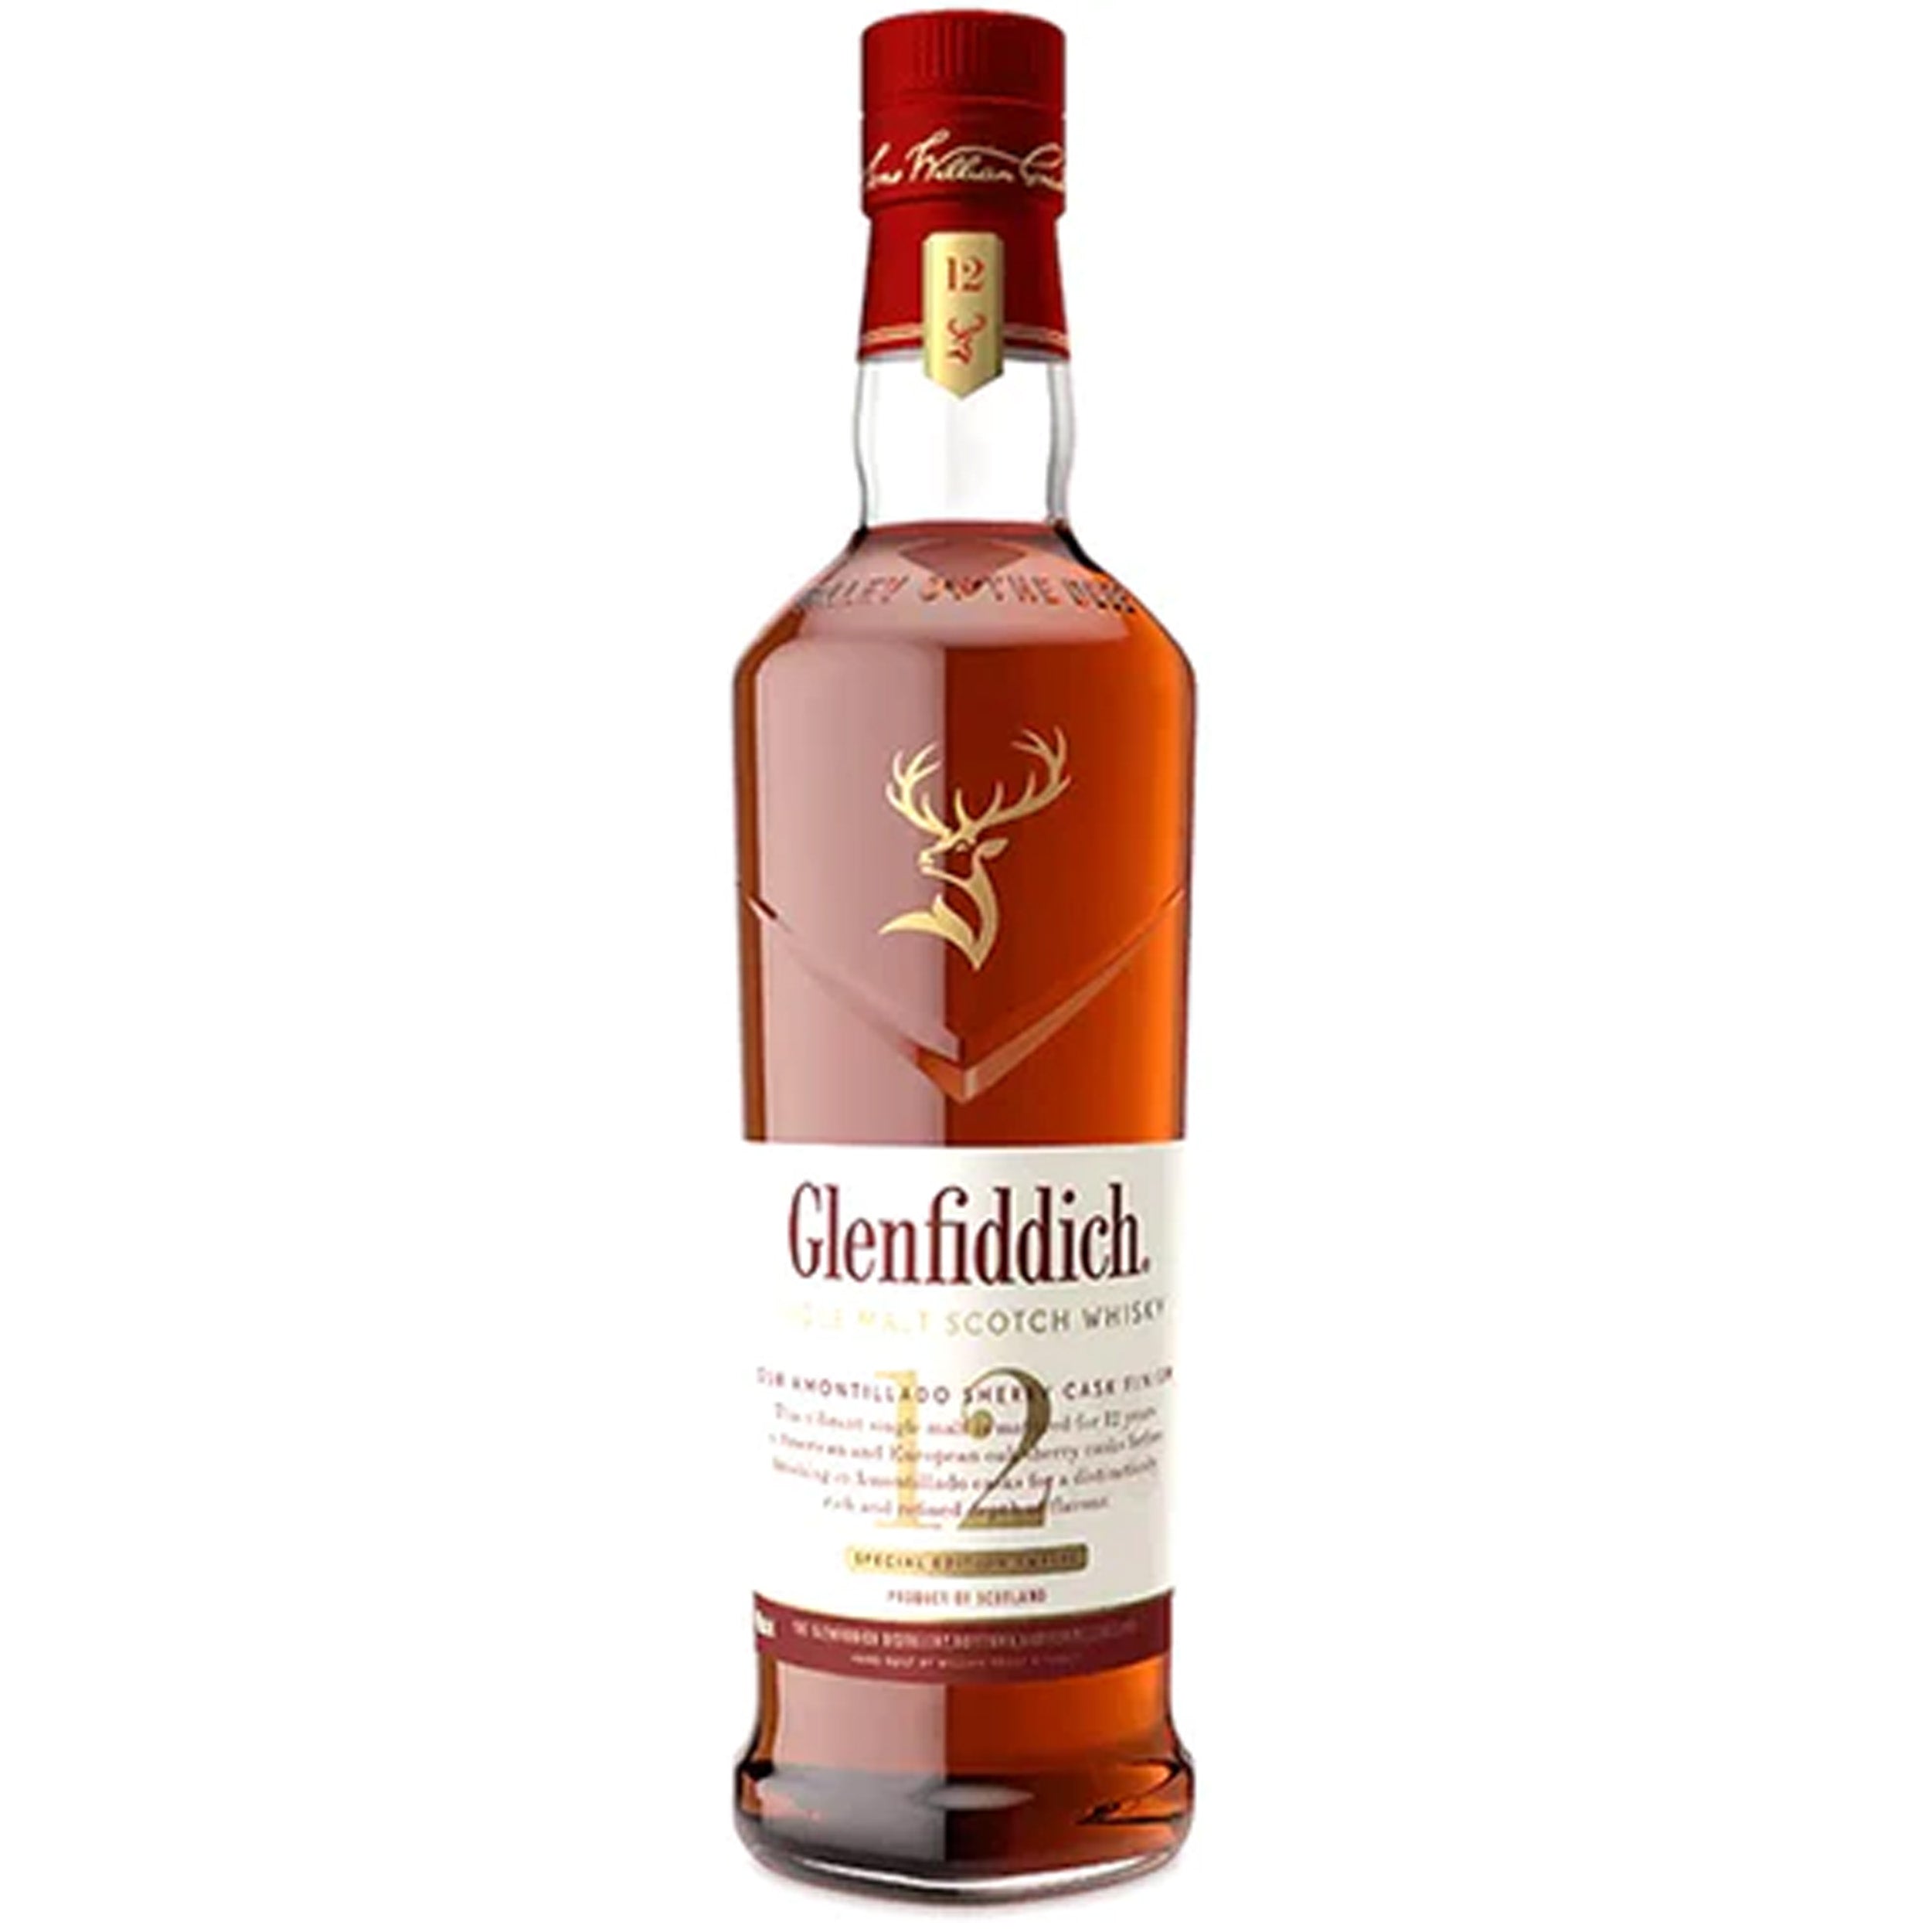 Glenfiddich 12 Year Old Amontillado Sherry Cask Finish Scotch Whisky